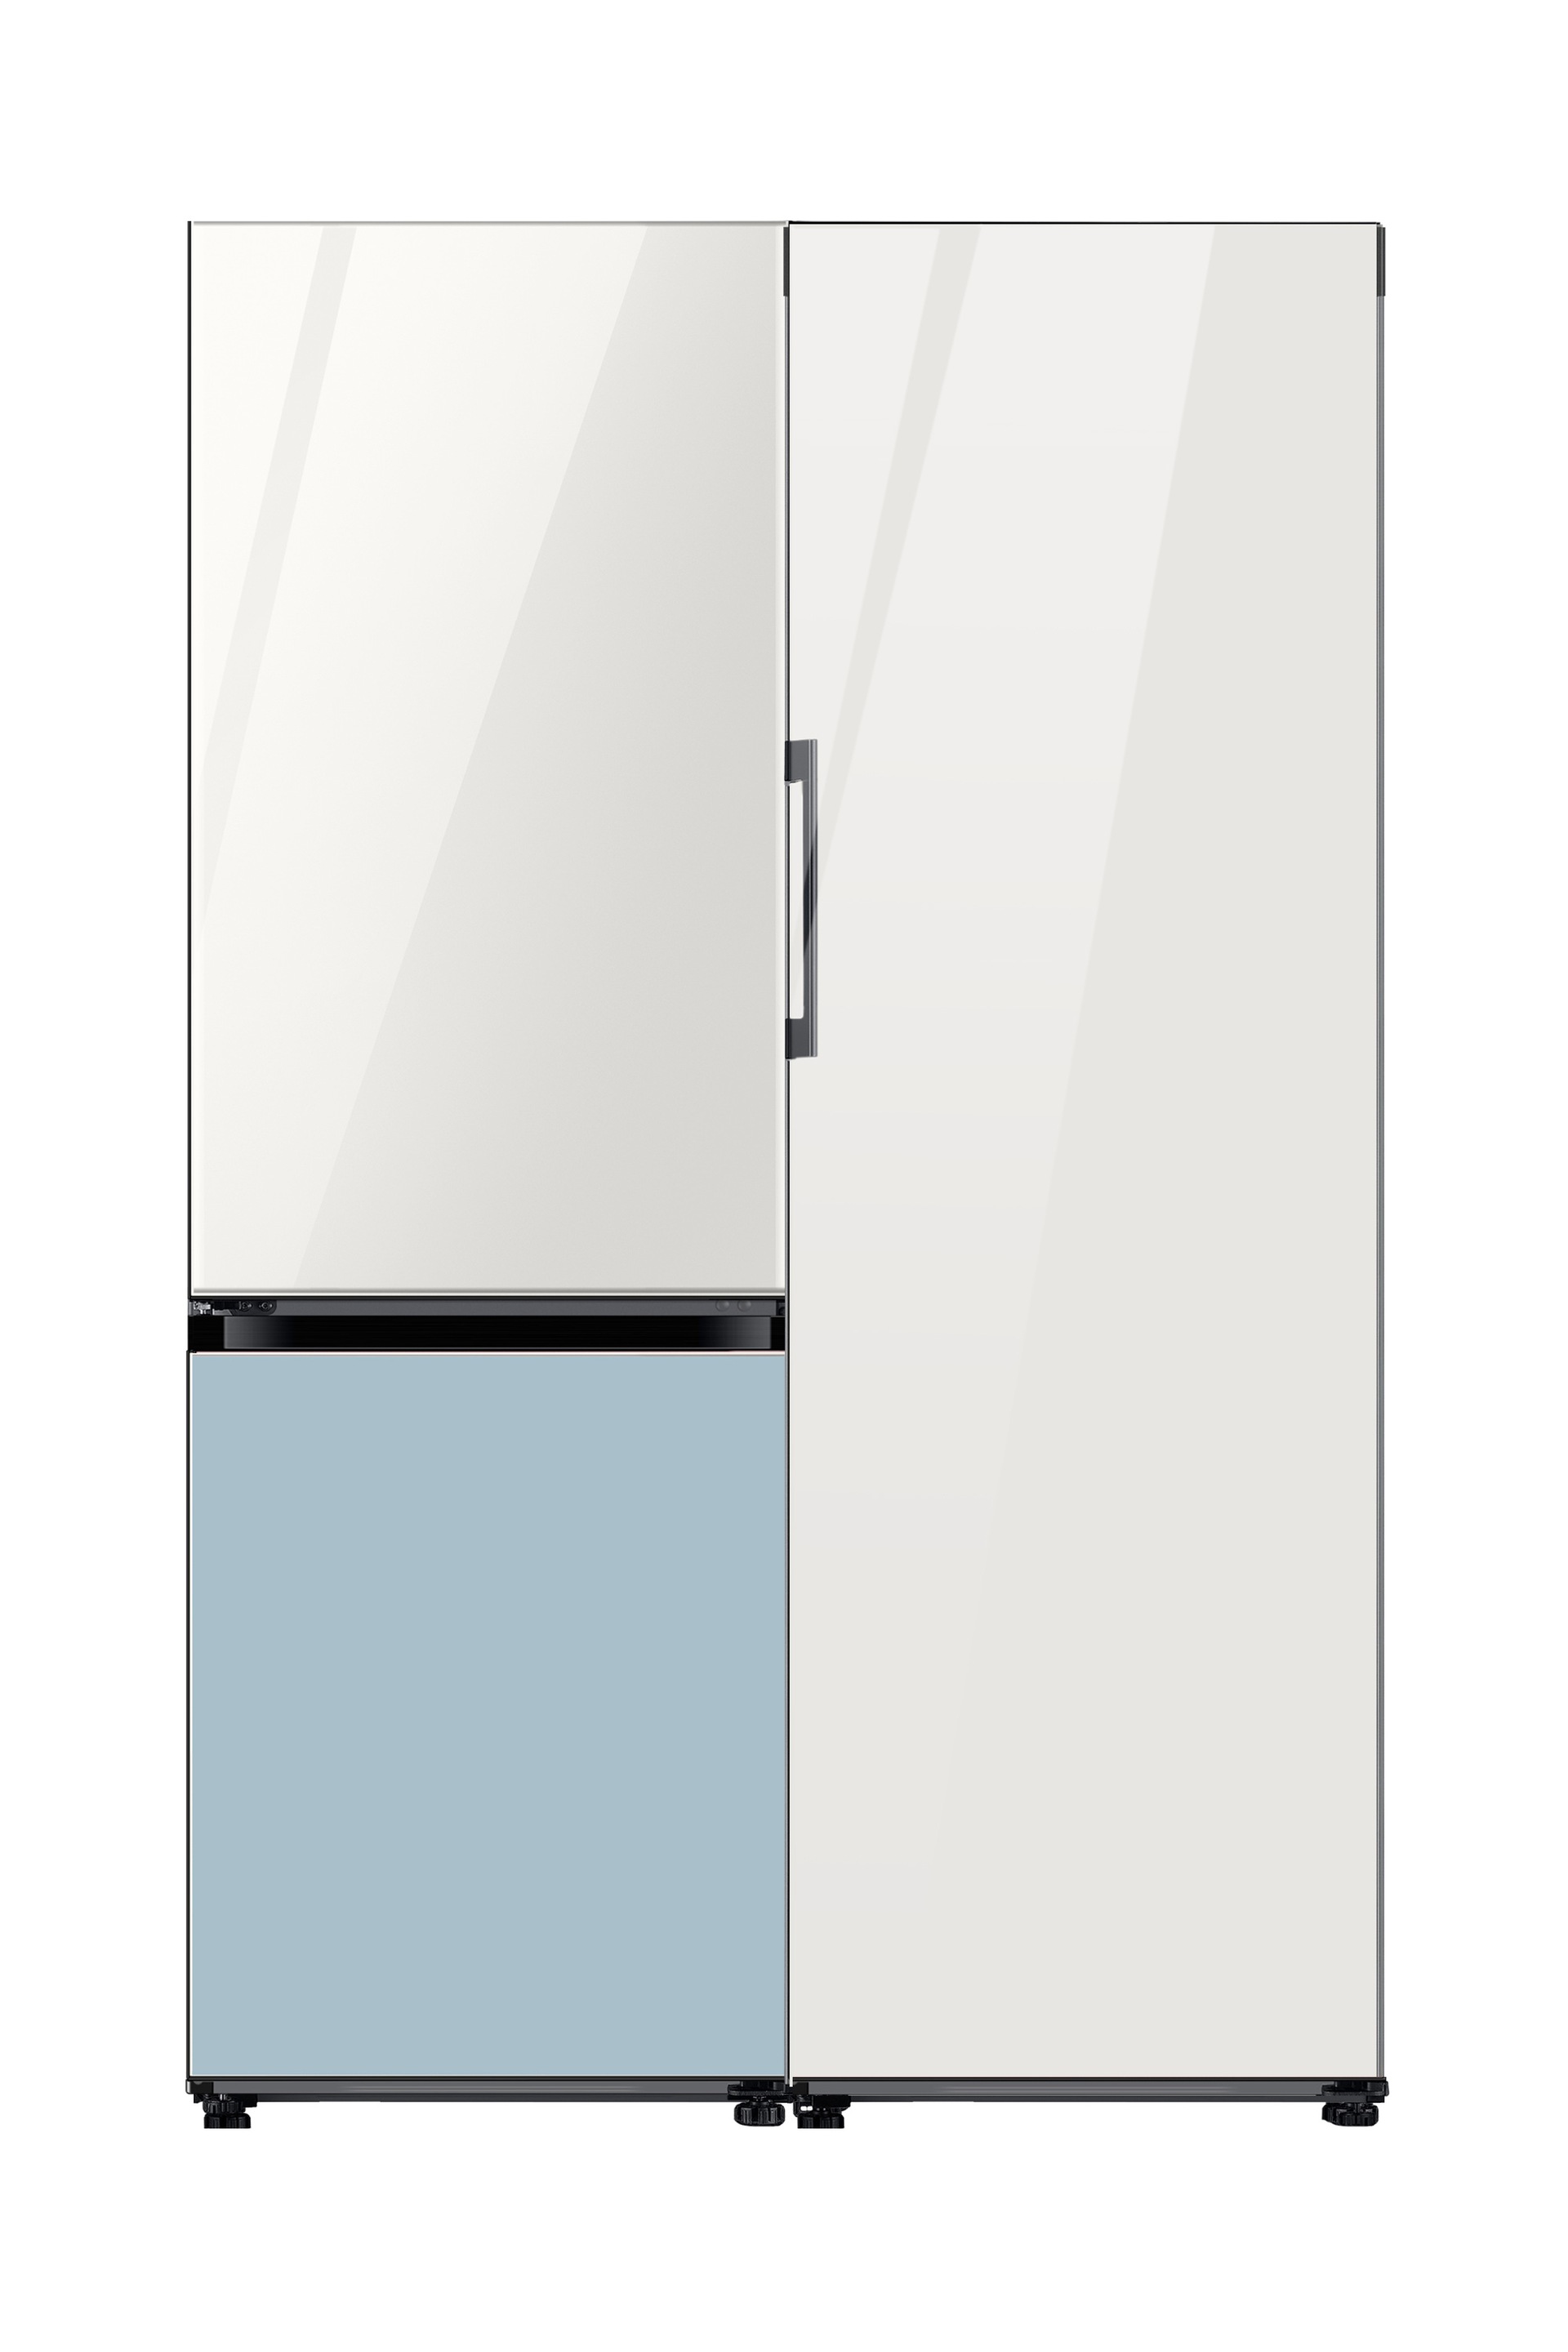 BESPOKE Refrigerator 2 Door (Top Glam White Bottom Satin Skyblue) + 1 Door (Glam White) Combination